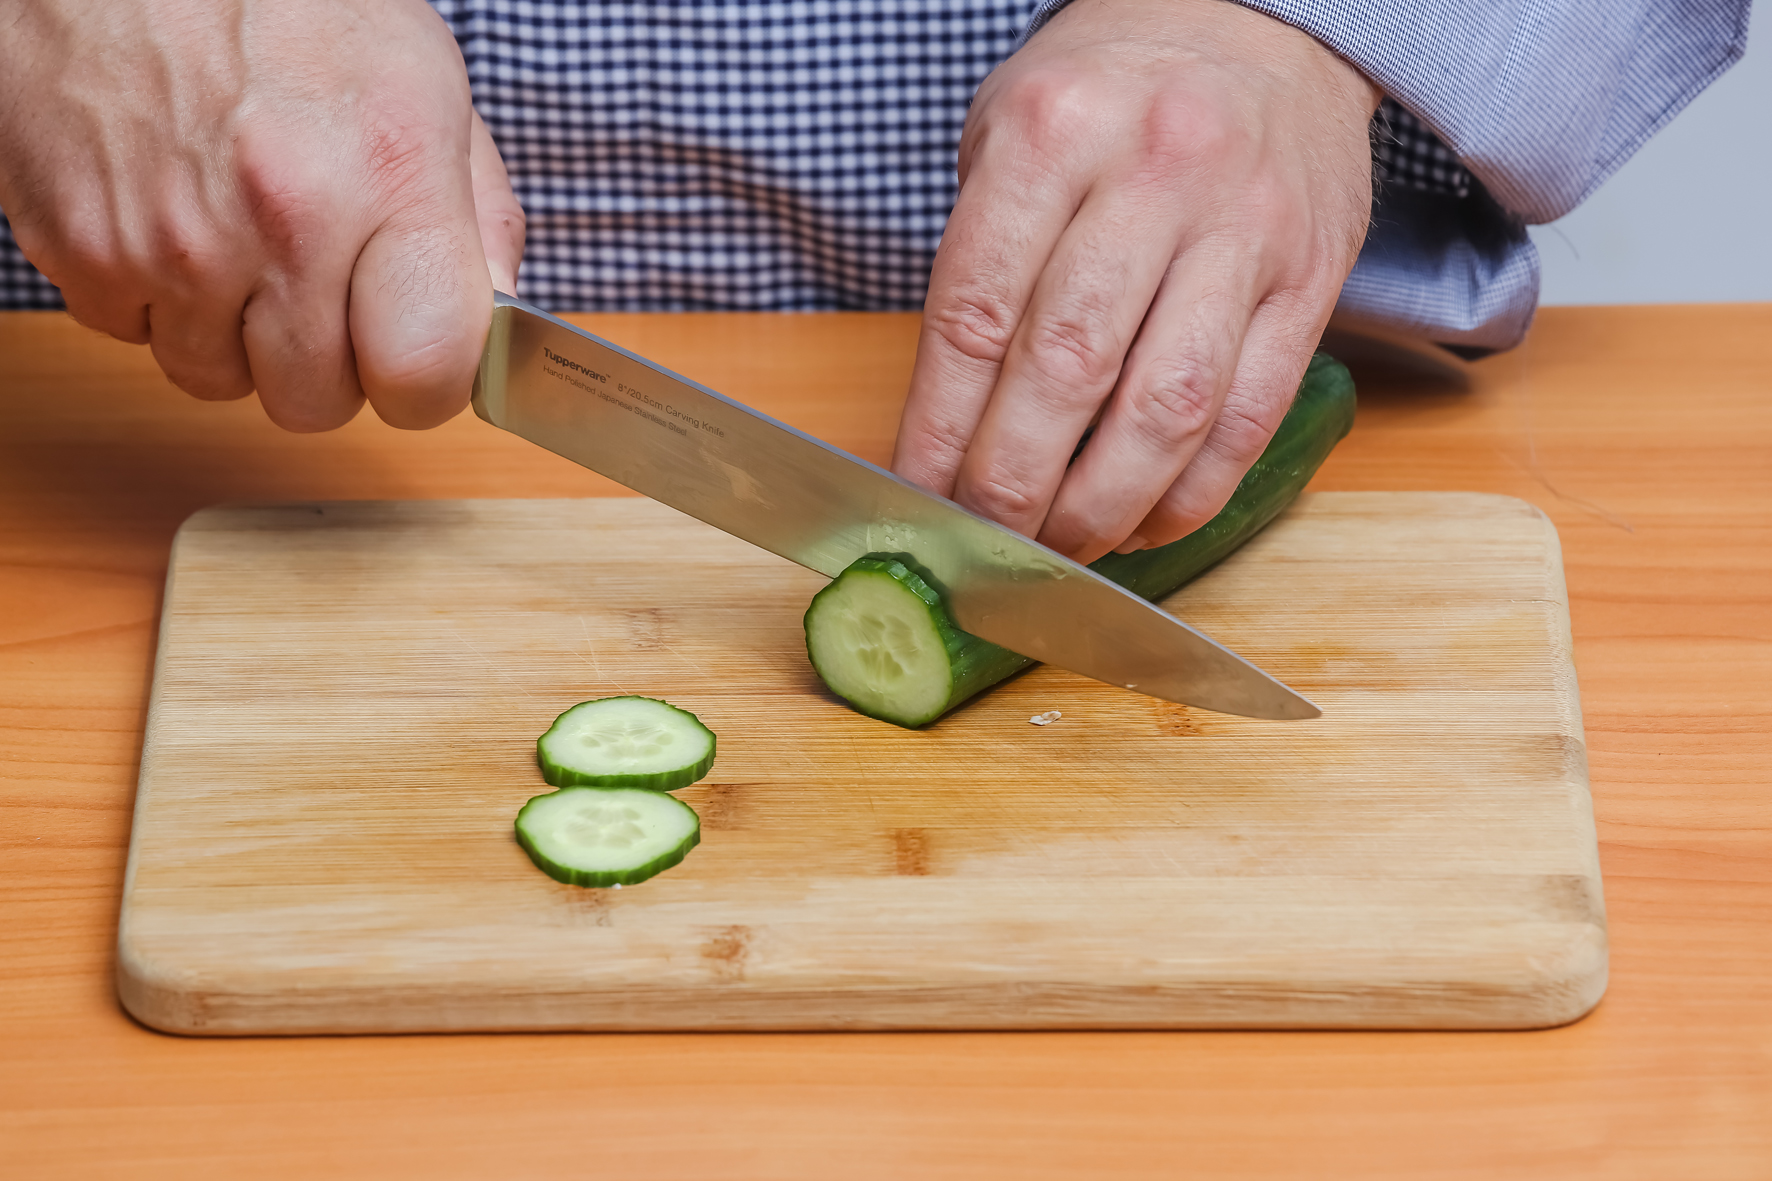 Нож режет овощи. Резать овощи. Нарезанные овощи. Шинковать овощи. Нож нарезает овощи.